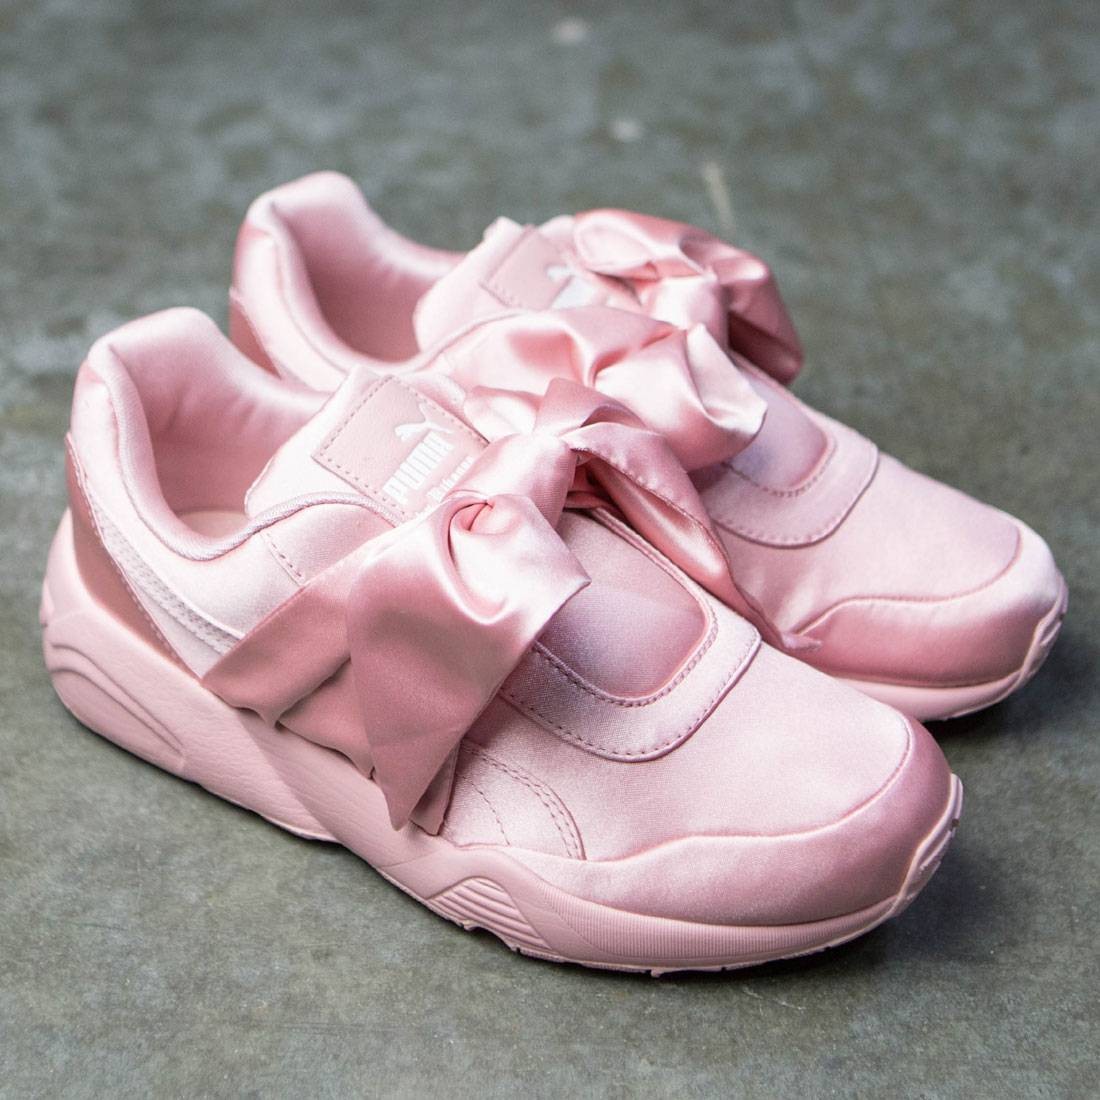 rihanna puma sneakers pink